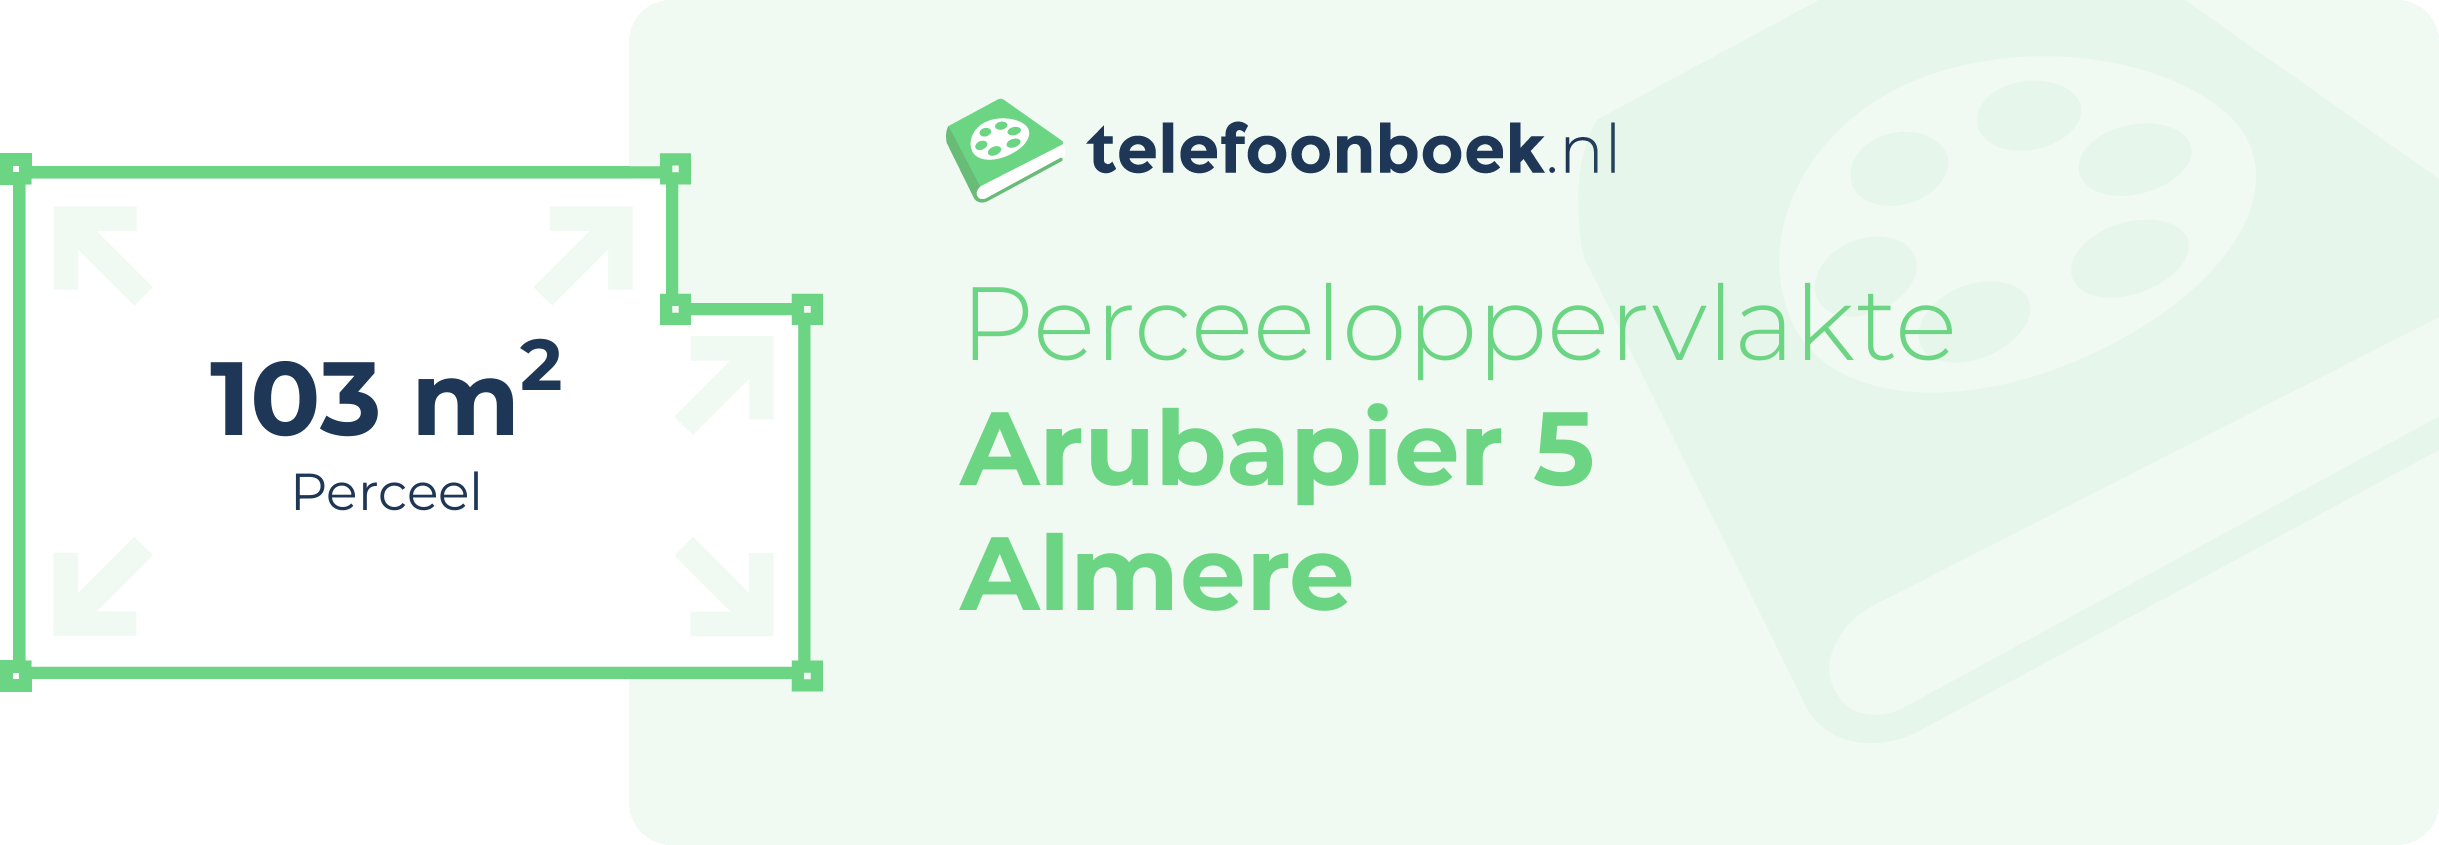 Perceeloppervlakte Arubapier 5 Almere